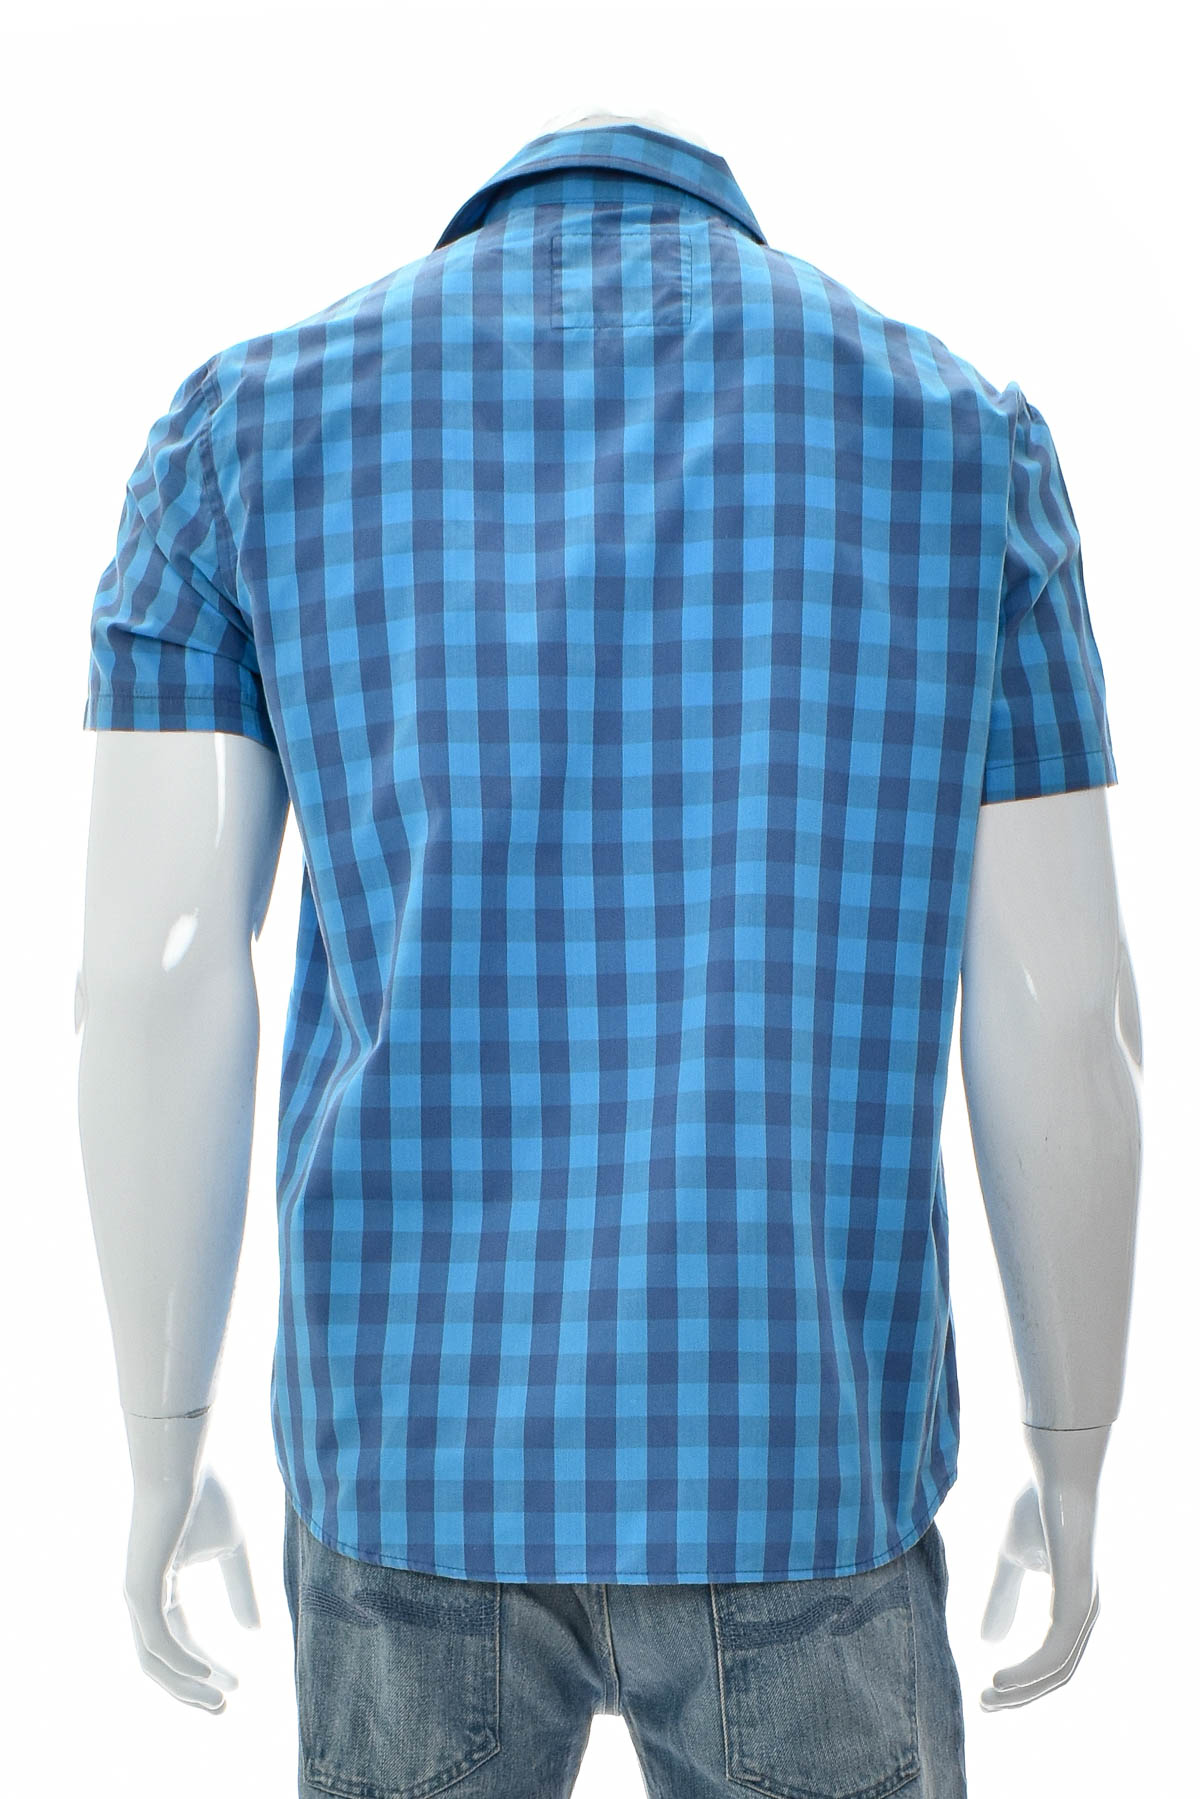 Men's shirt - Jean Pascale - 1